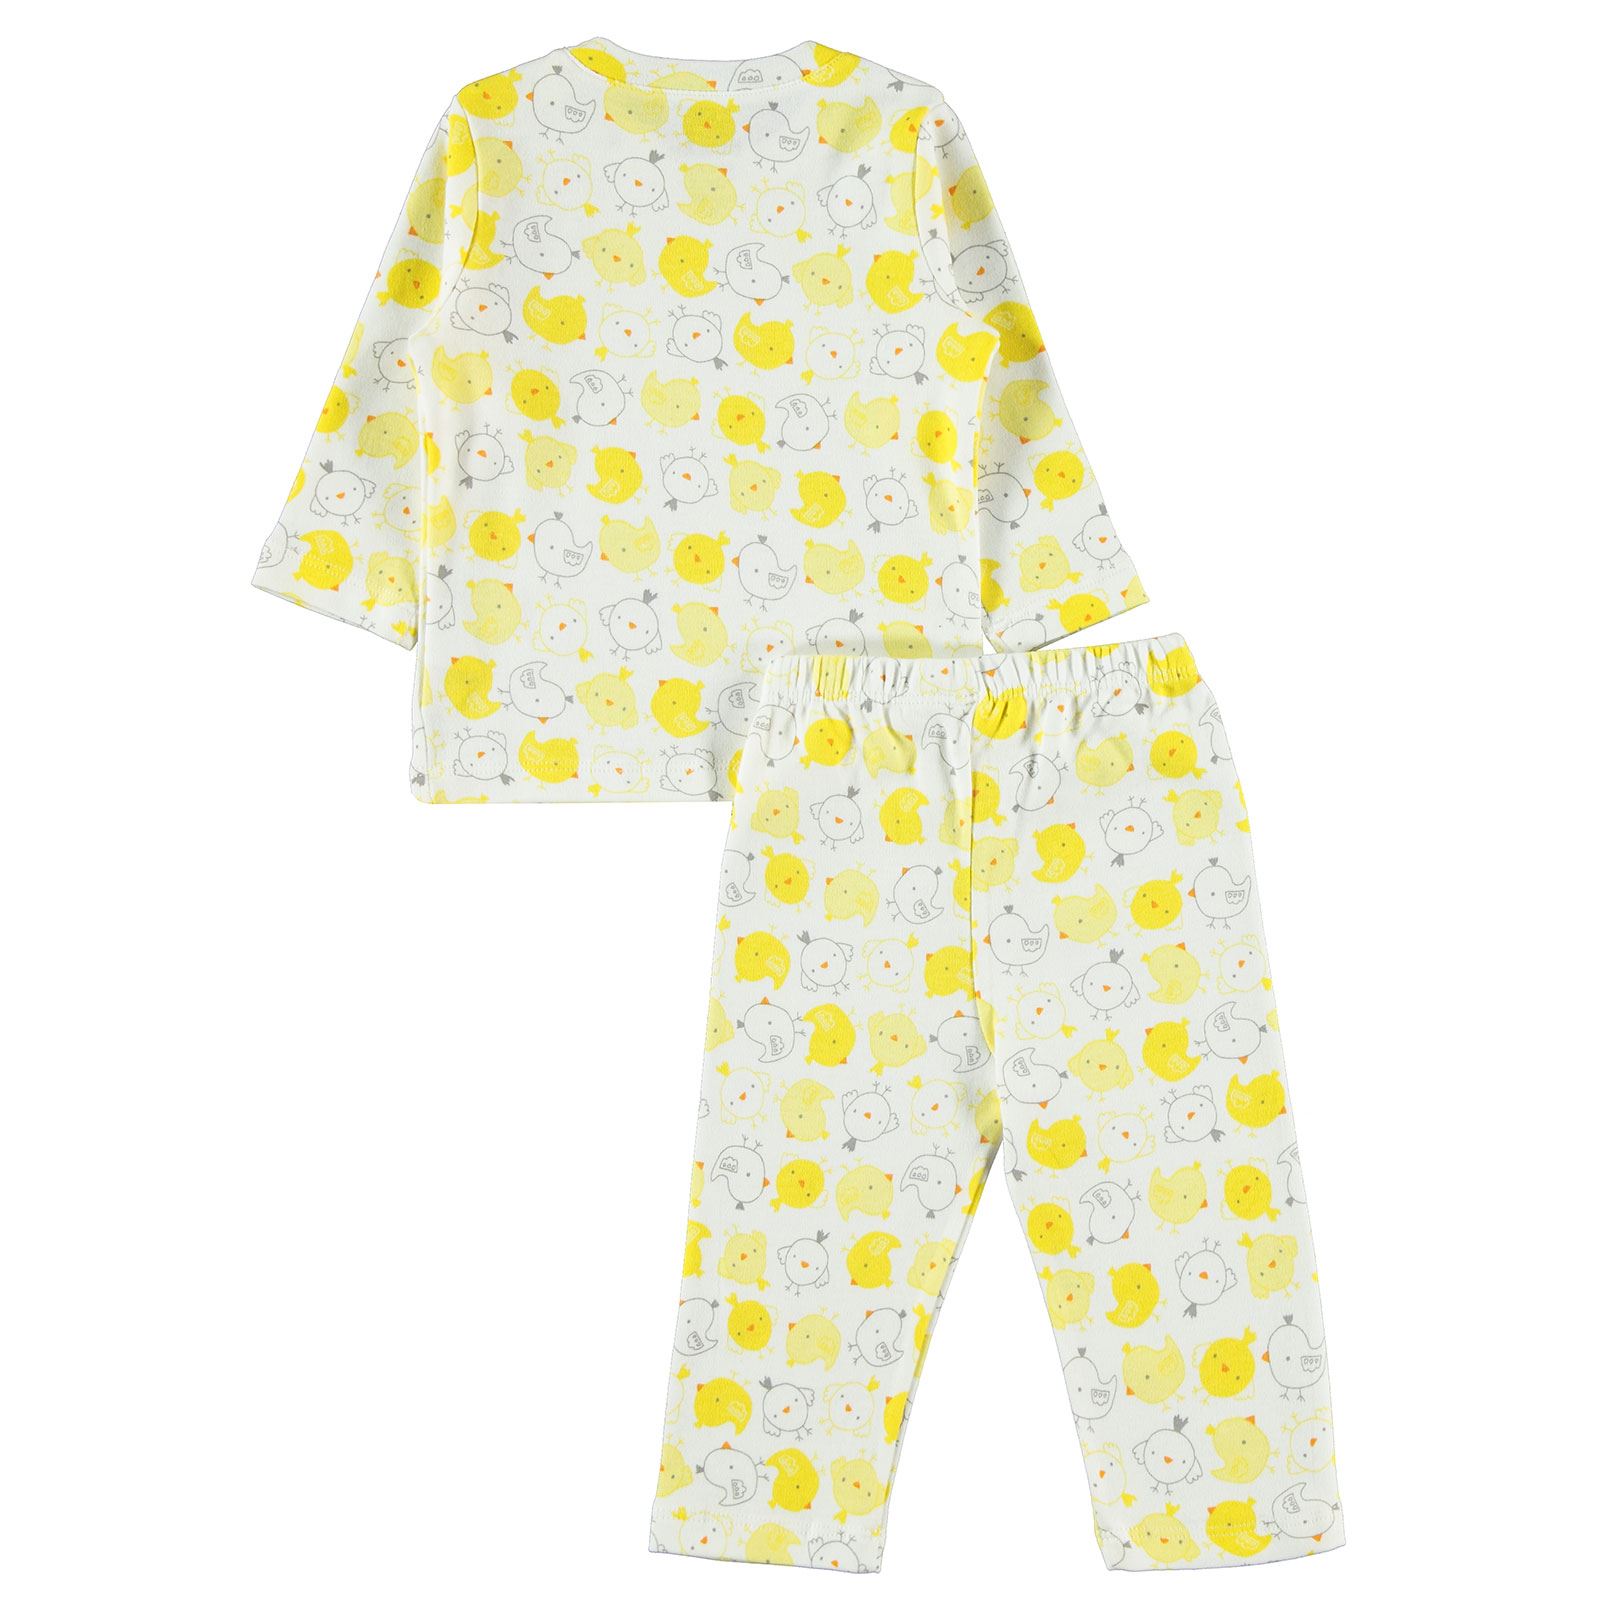 Kujju Bebek Pijama Takımı 6-18 Ay Sarı